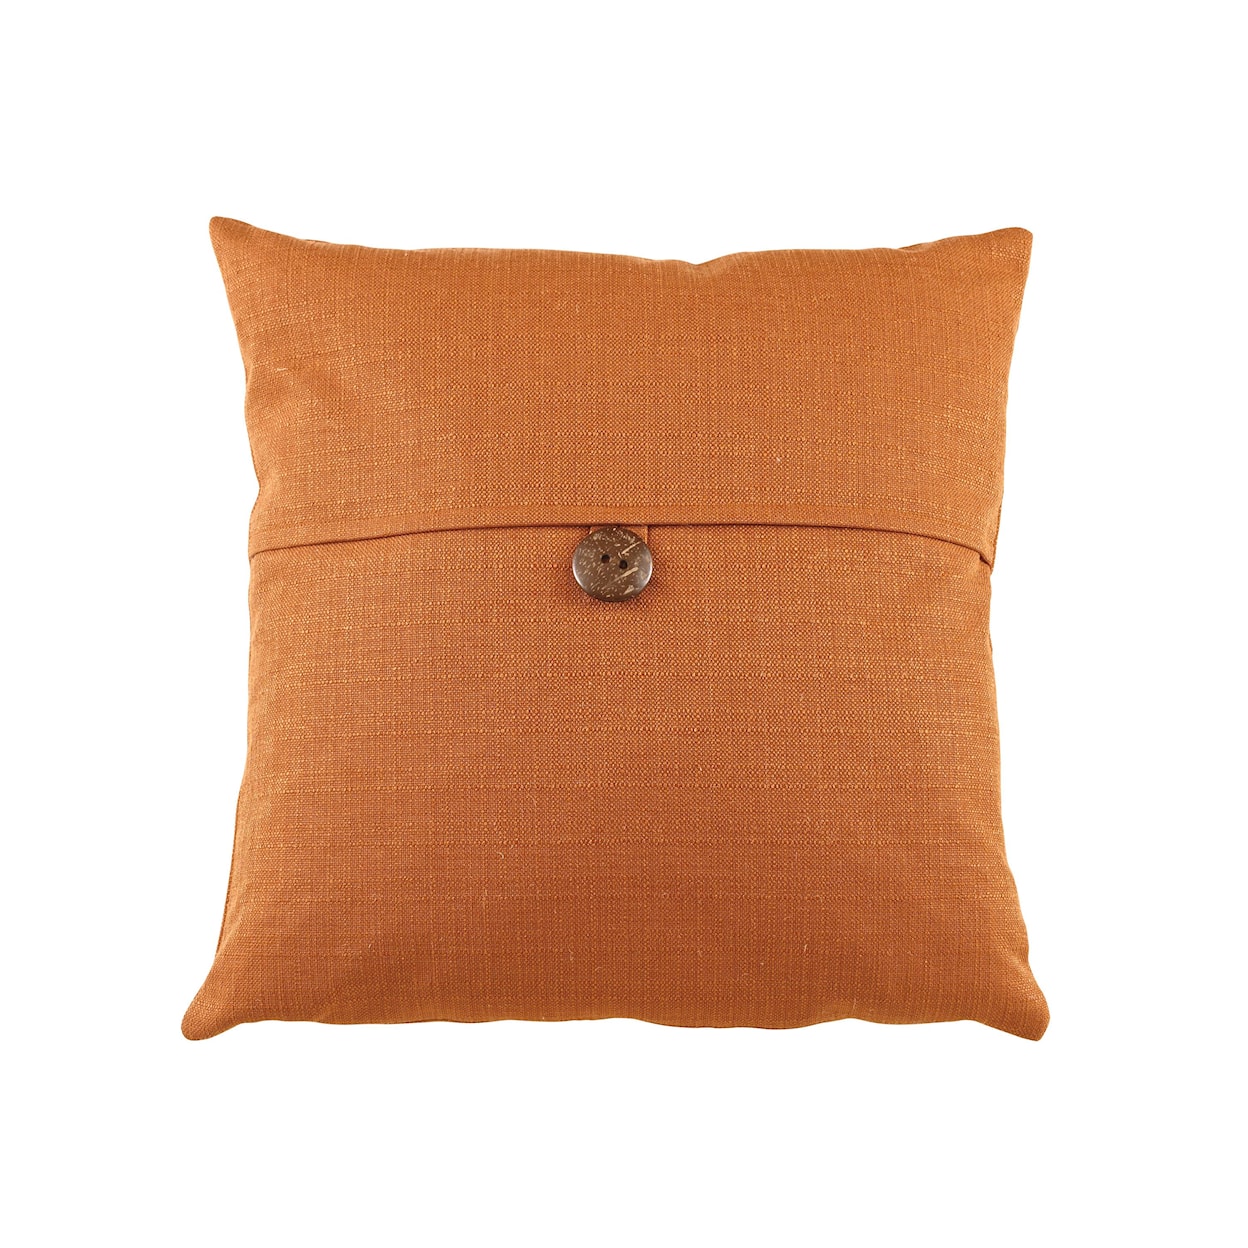 Ashley Furniture Signature Design Pillows Jolissa - Tangerine, Set of 6